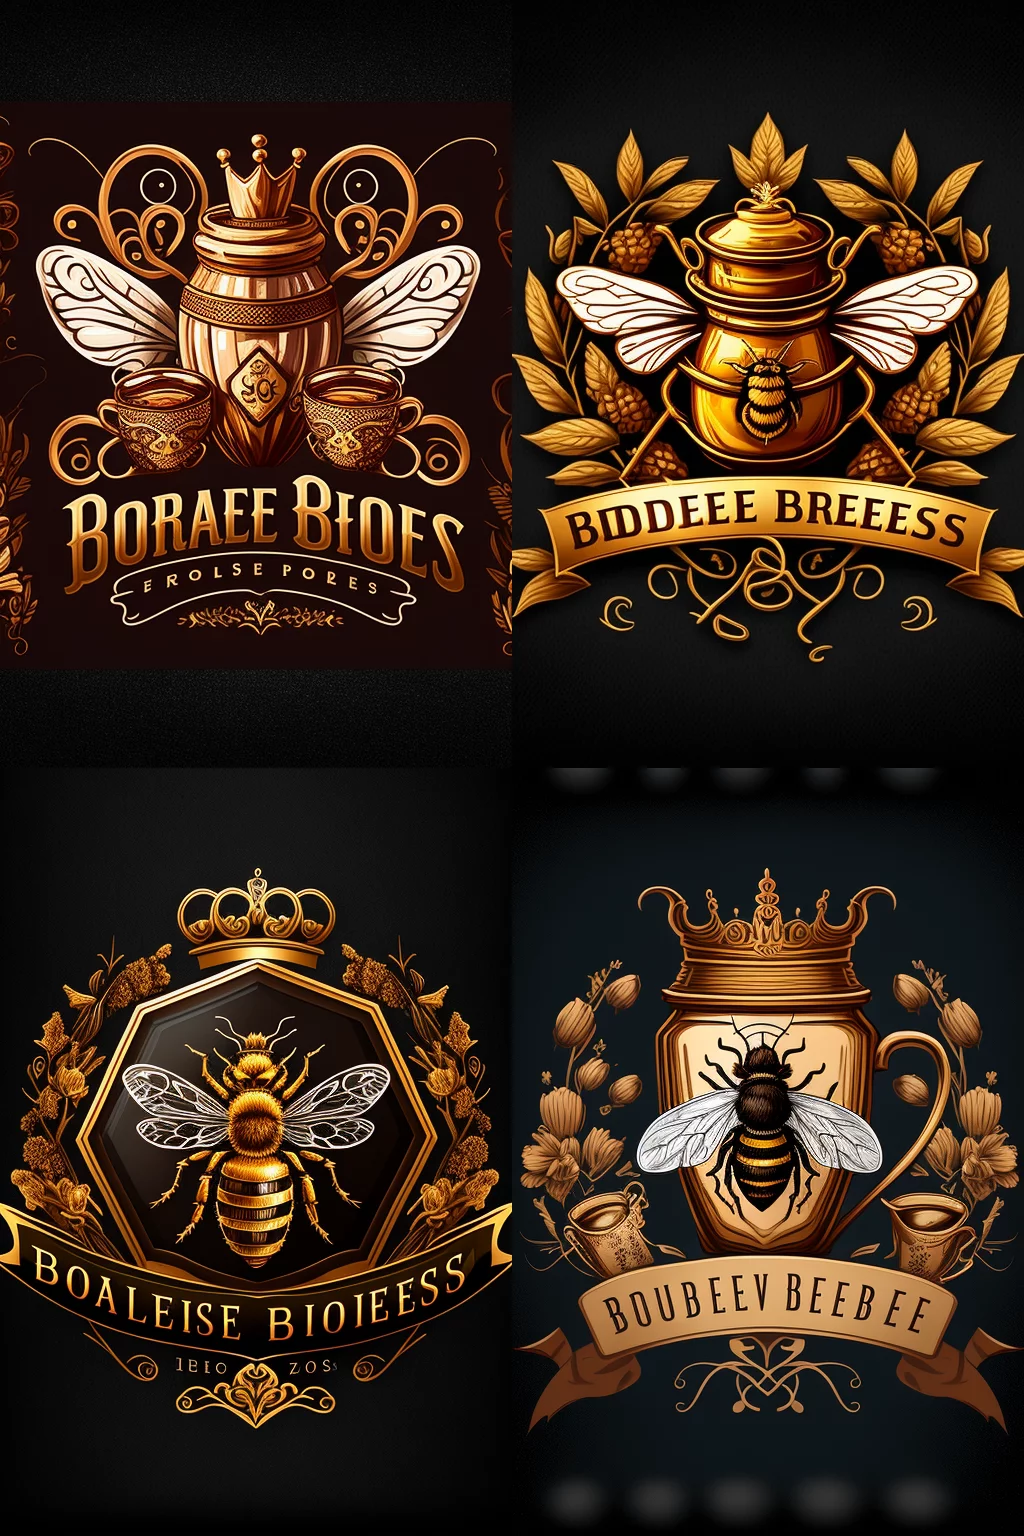 Royal bee logo